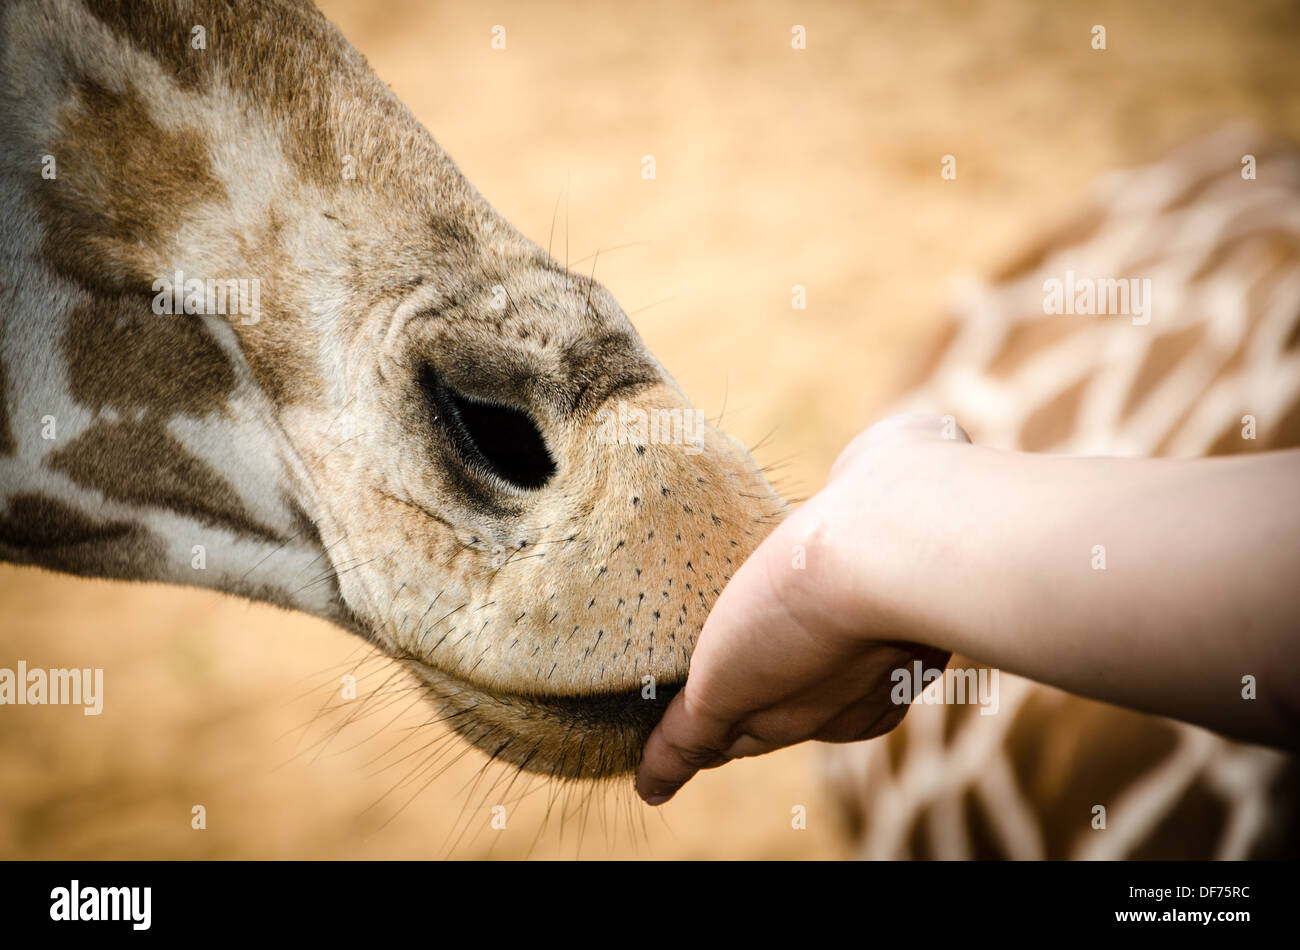 Giraffe Eating from Woman's Hand Stock Photo